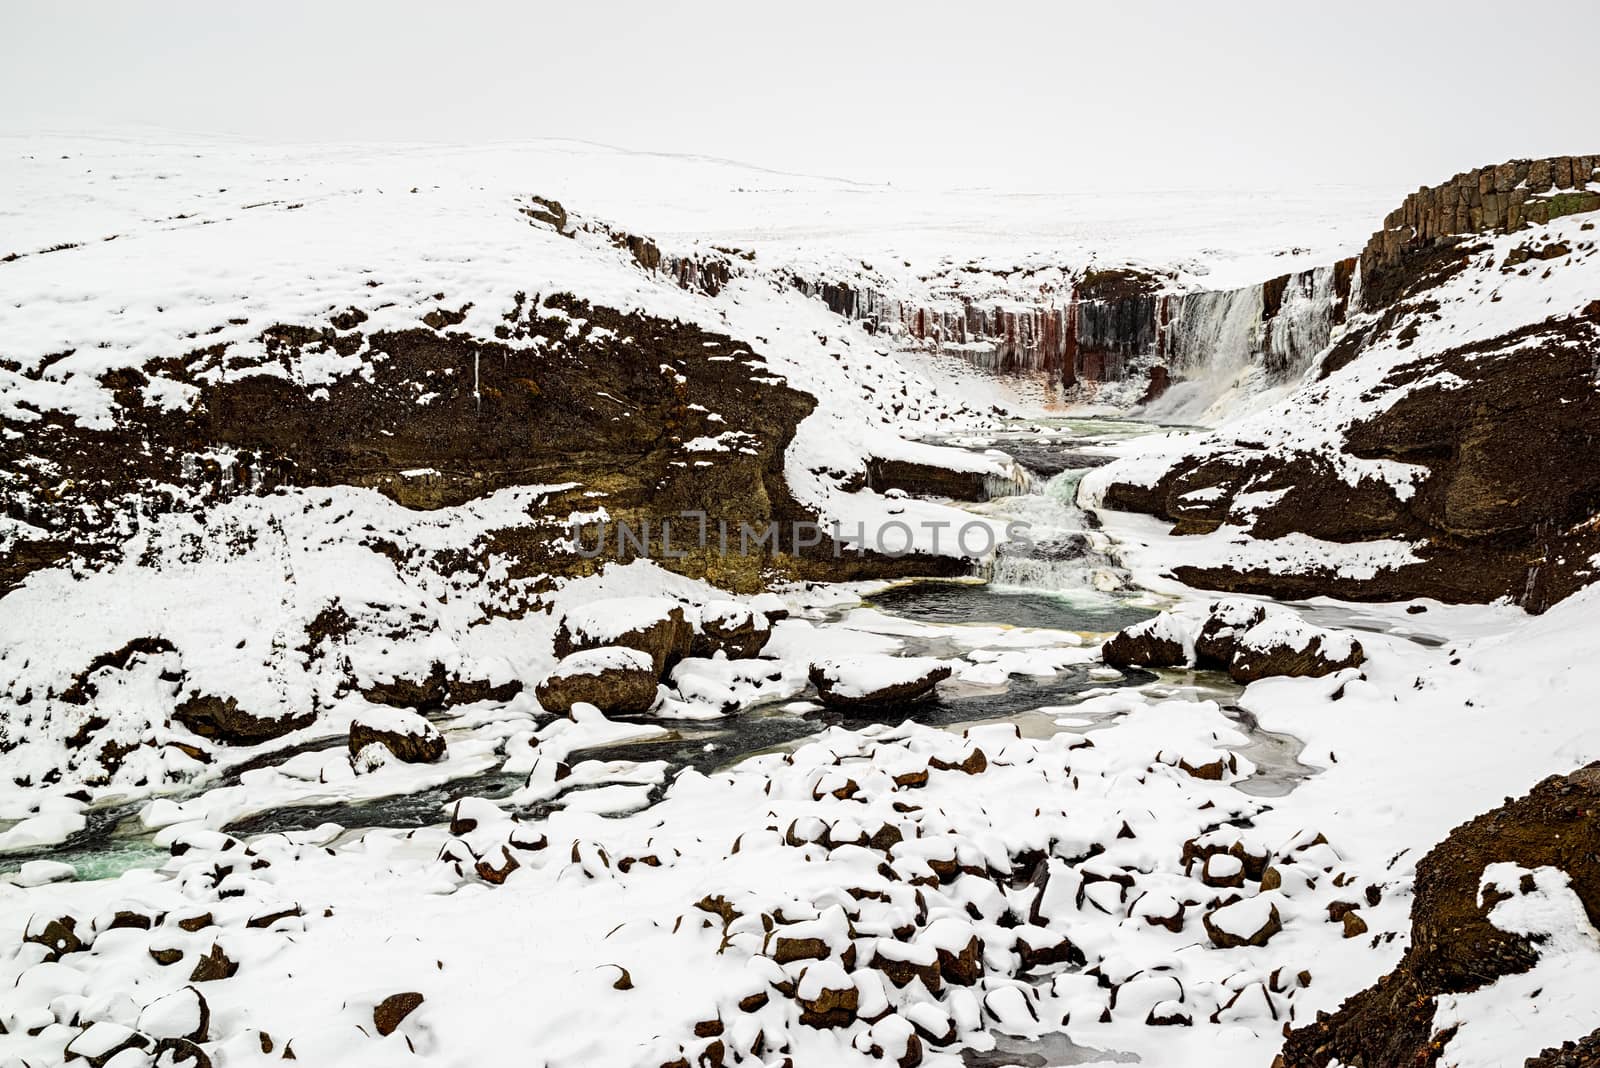 Snaedufoss waterfall, Iceland by LuigiMorbidelli